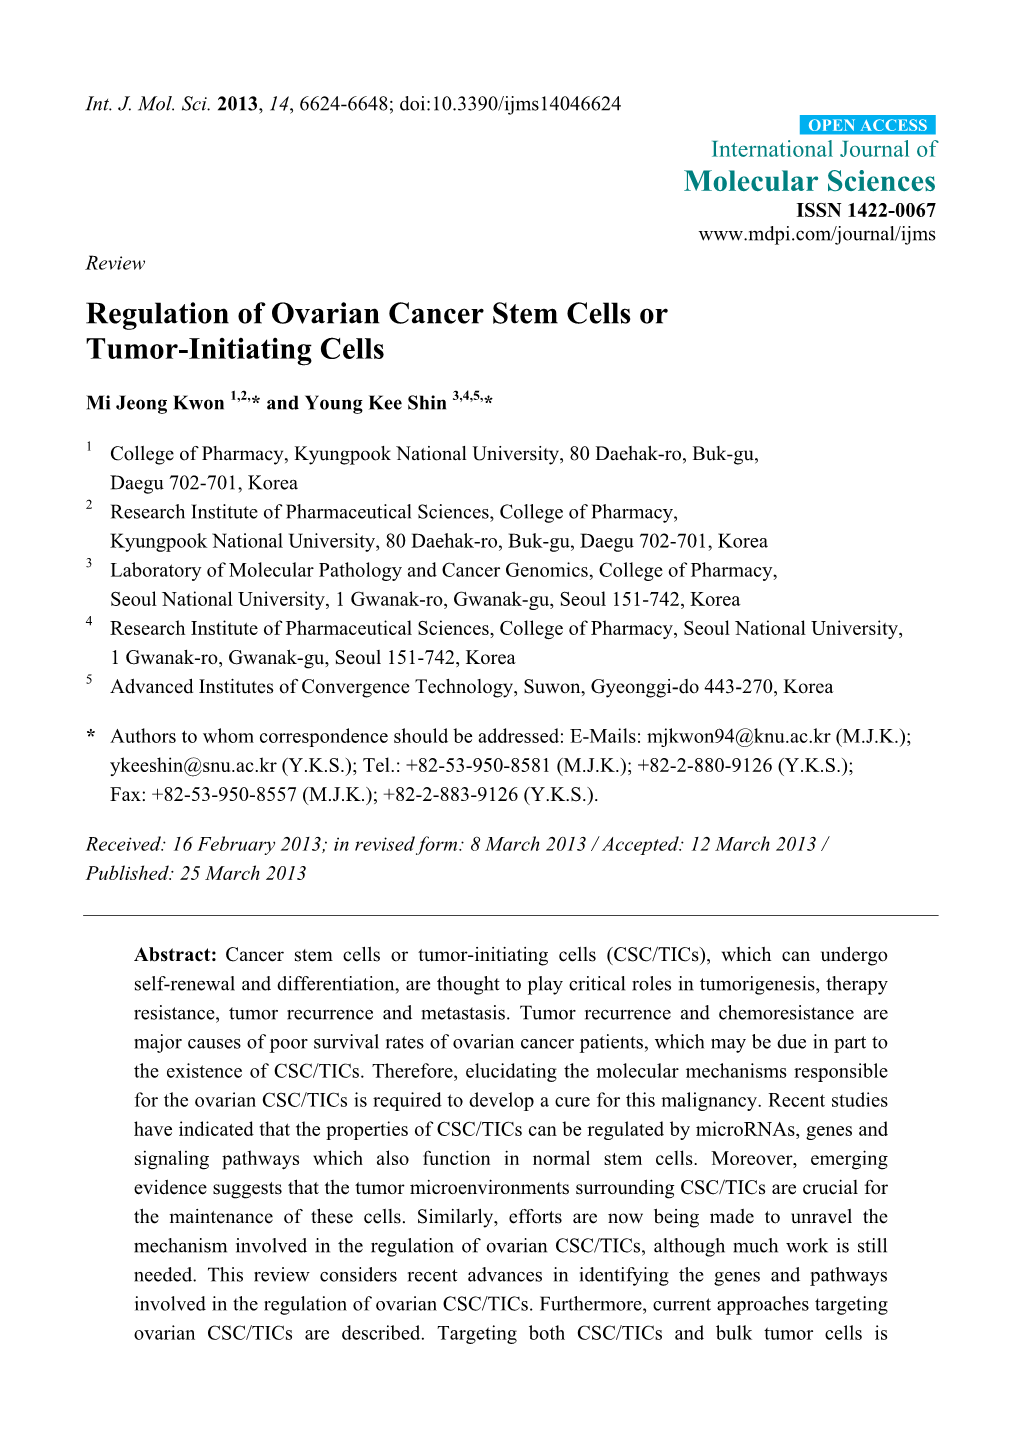 Regulation of Ovarian Cancer Stem Cells Or Tumor-Initiating Cells